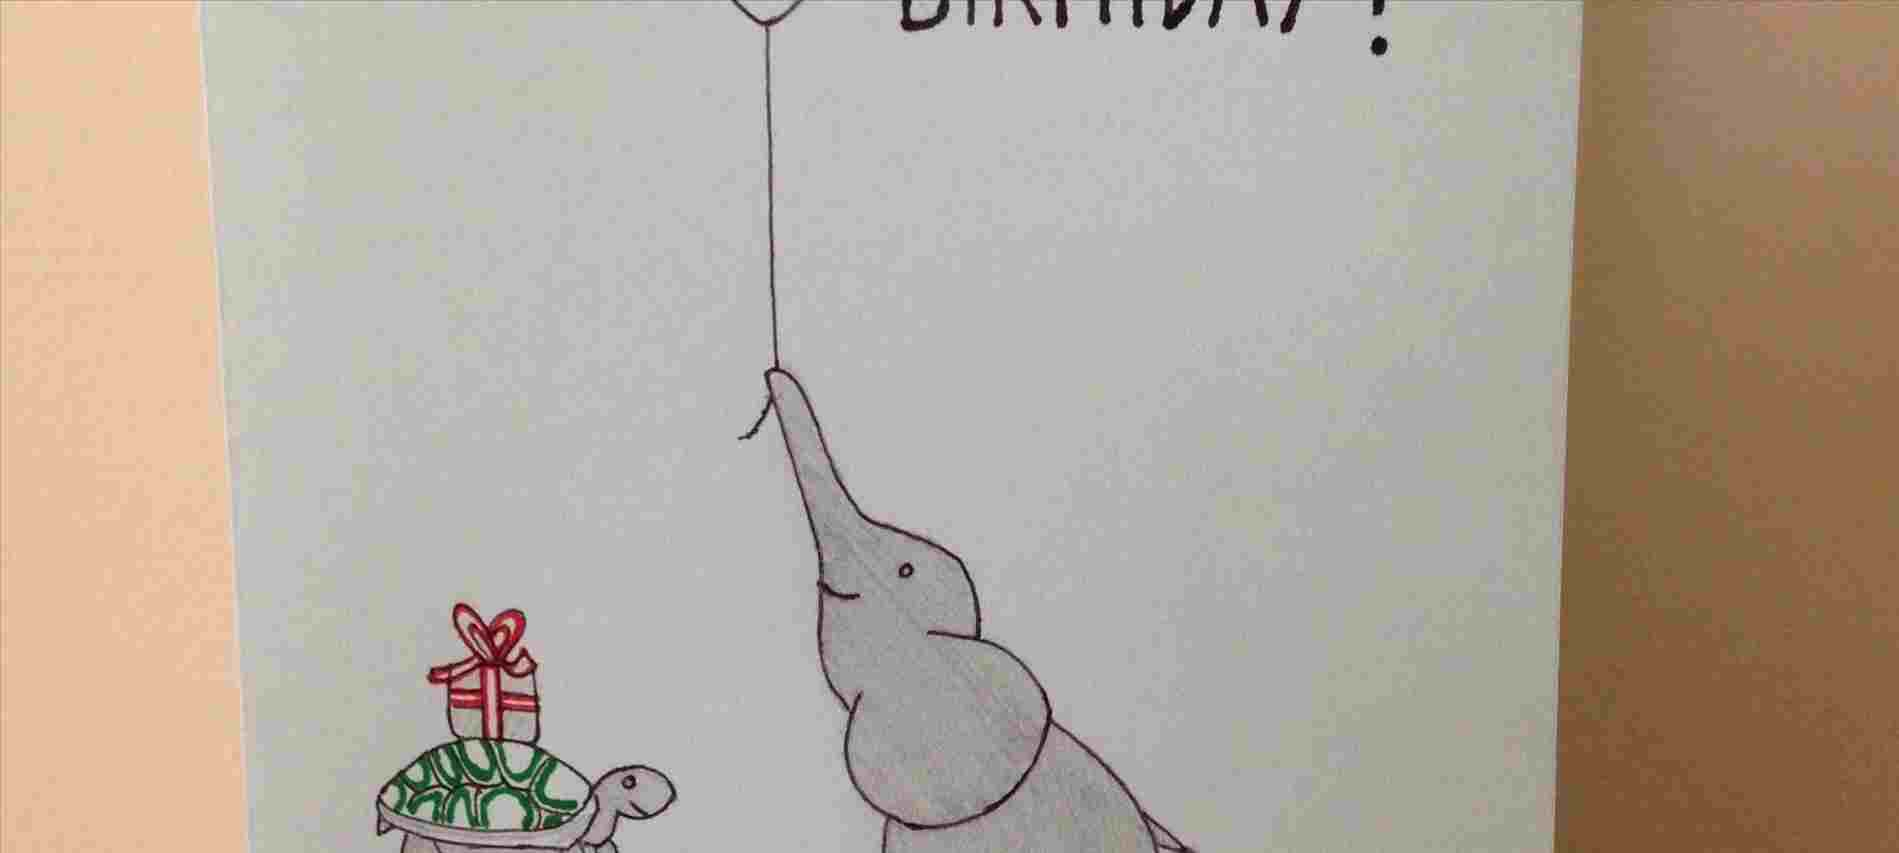 Birthday Card Drawing Ideas Rhlqaudiocom Birthday Hand Drawn Birthday Card Drawing Ideas Card